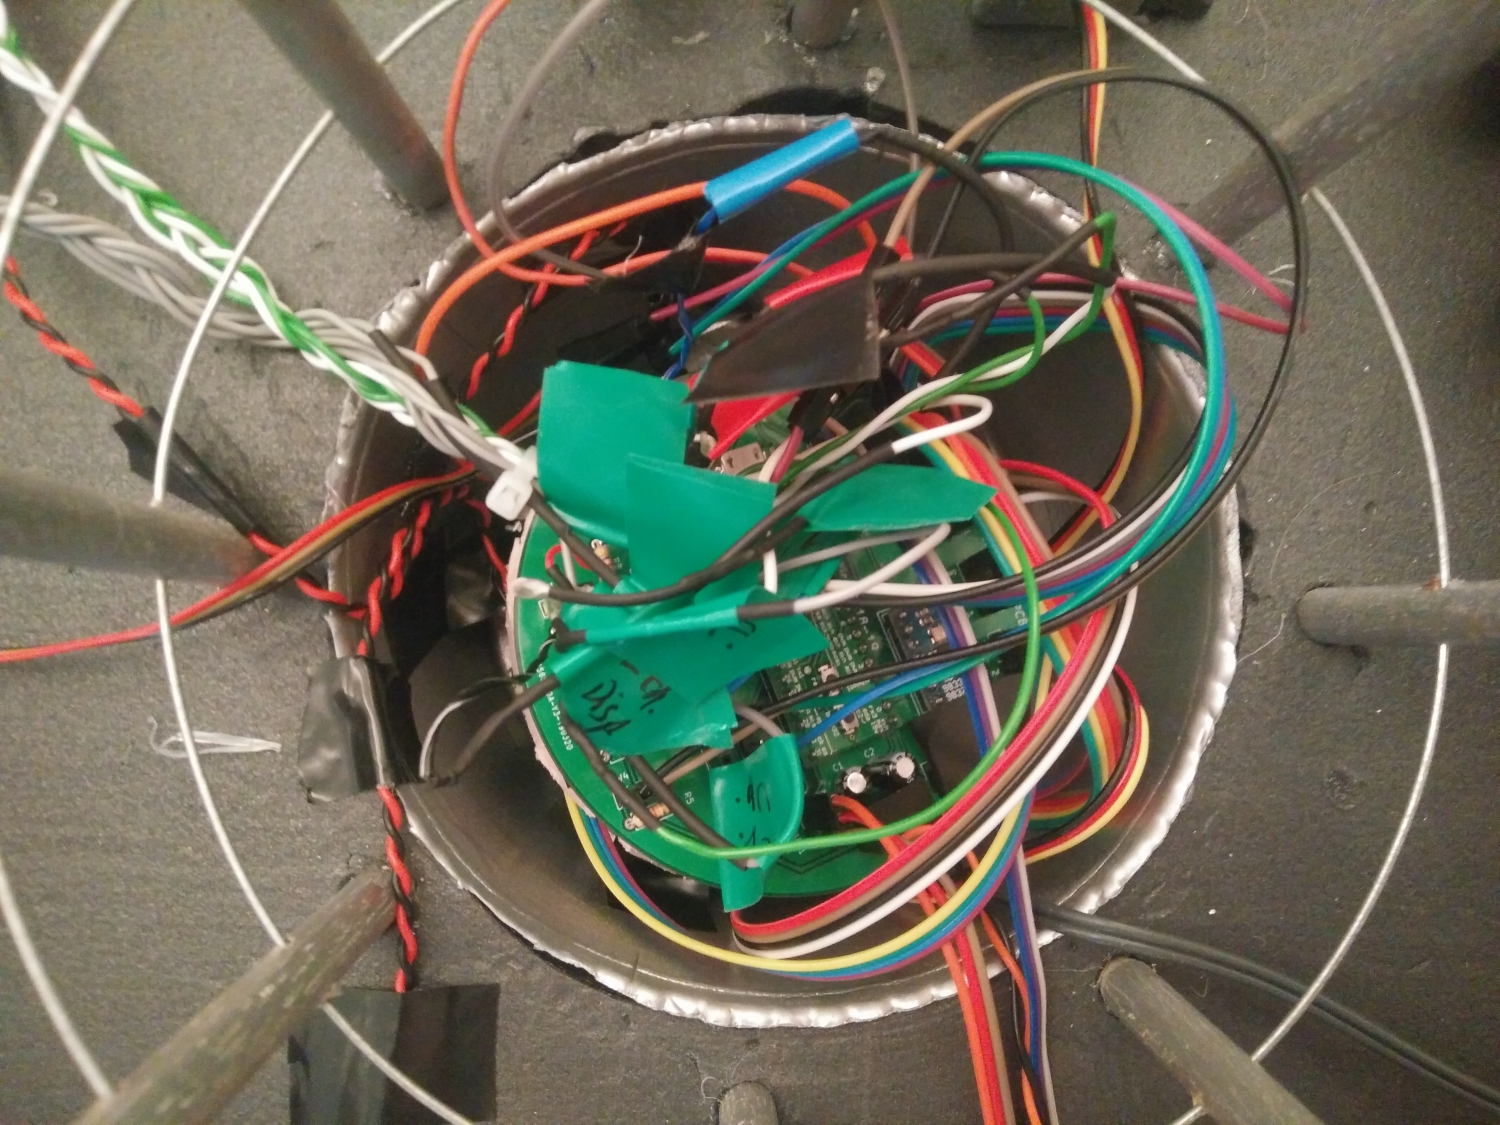 Electronics stuffed into the radiometer well